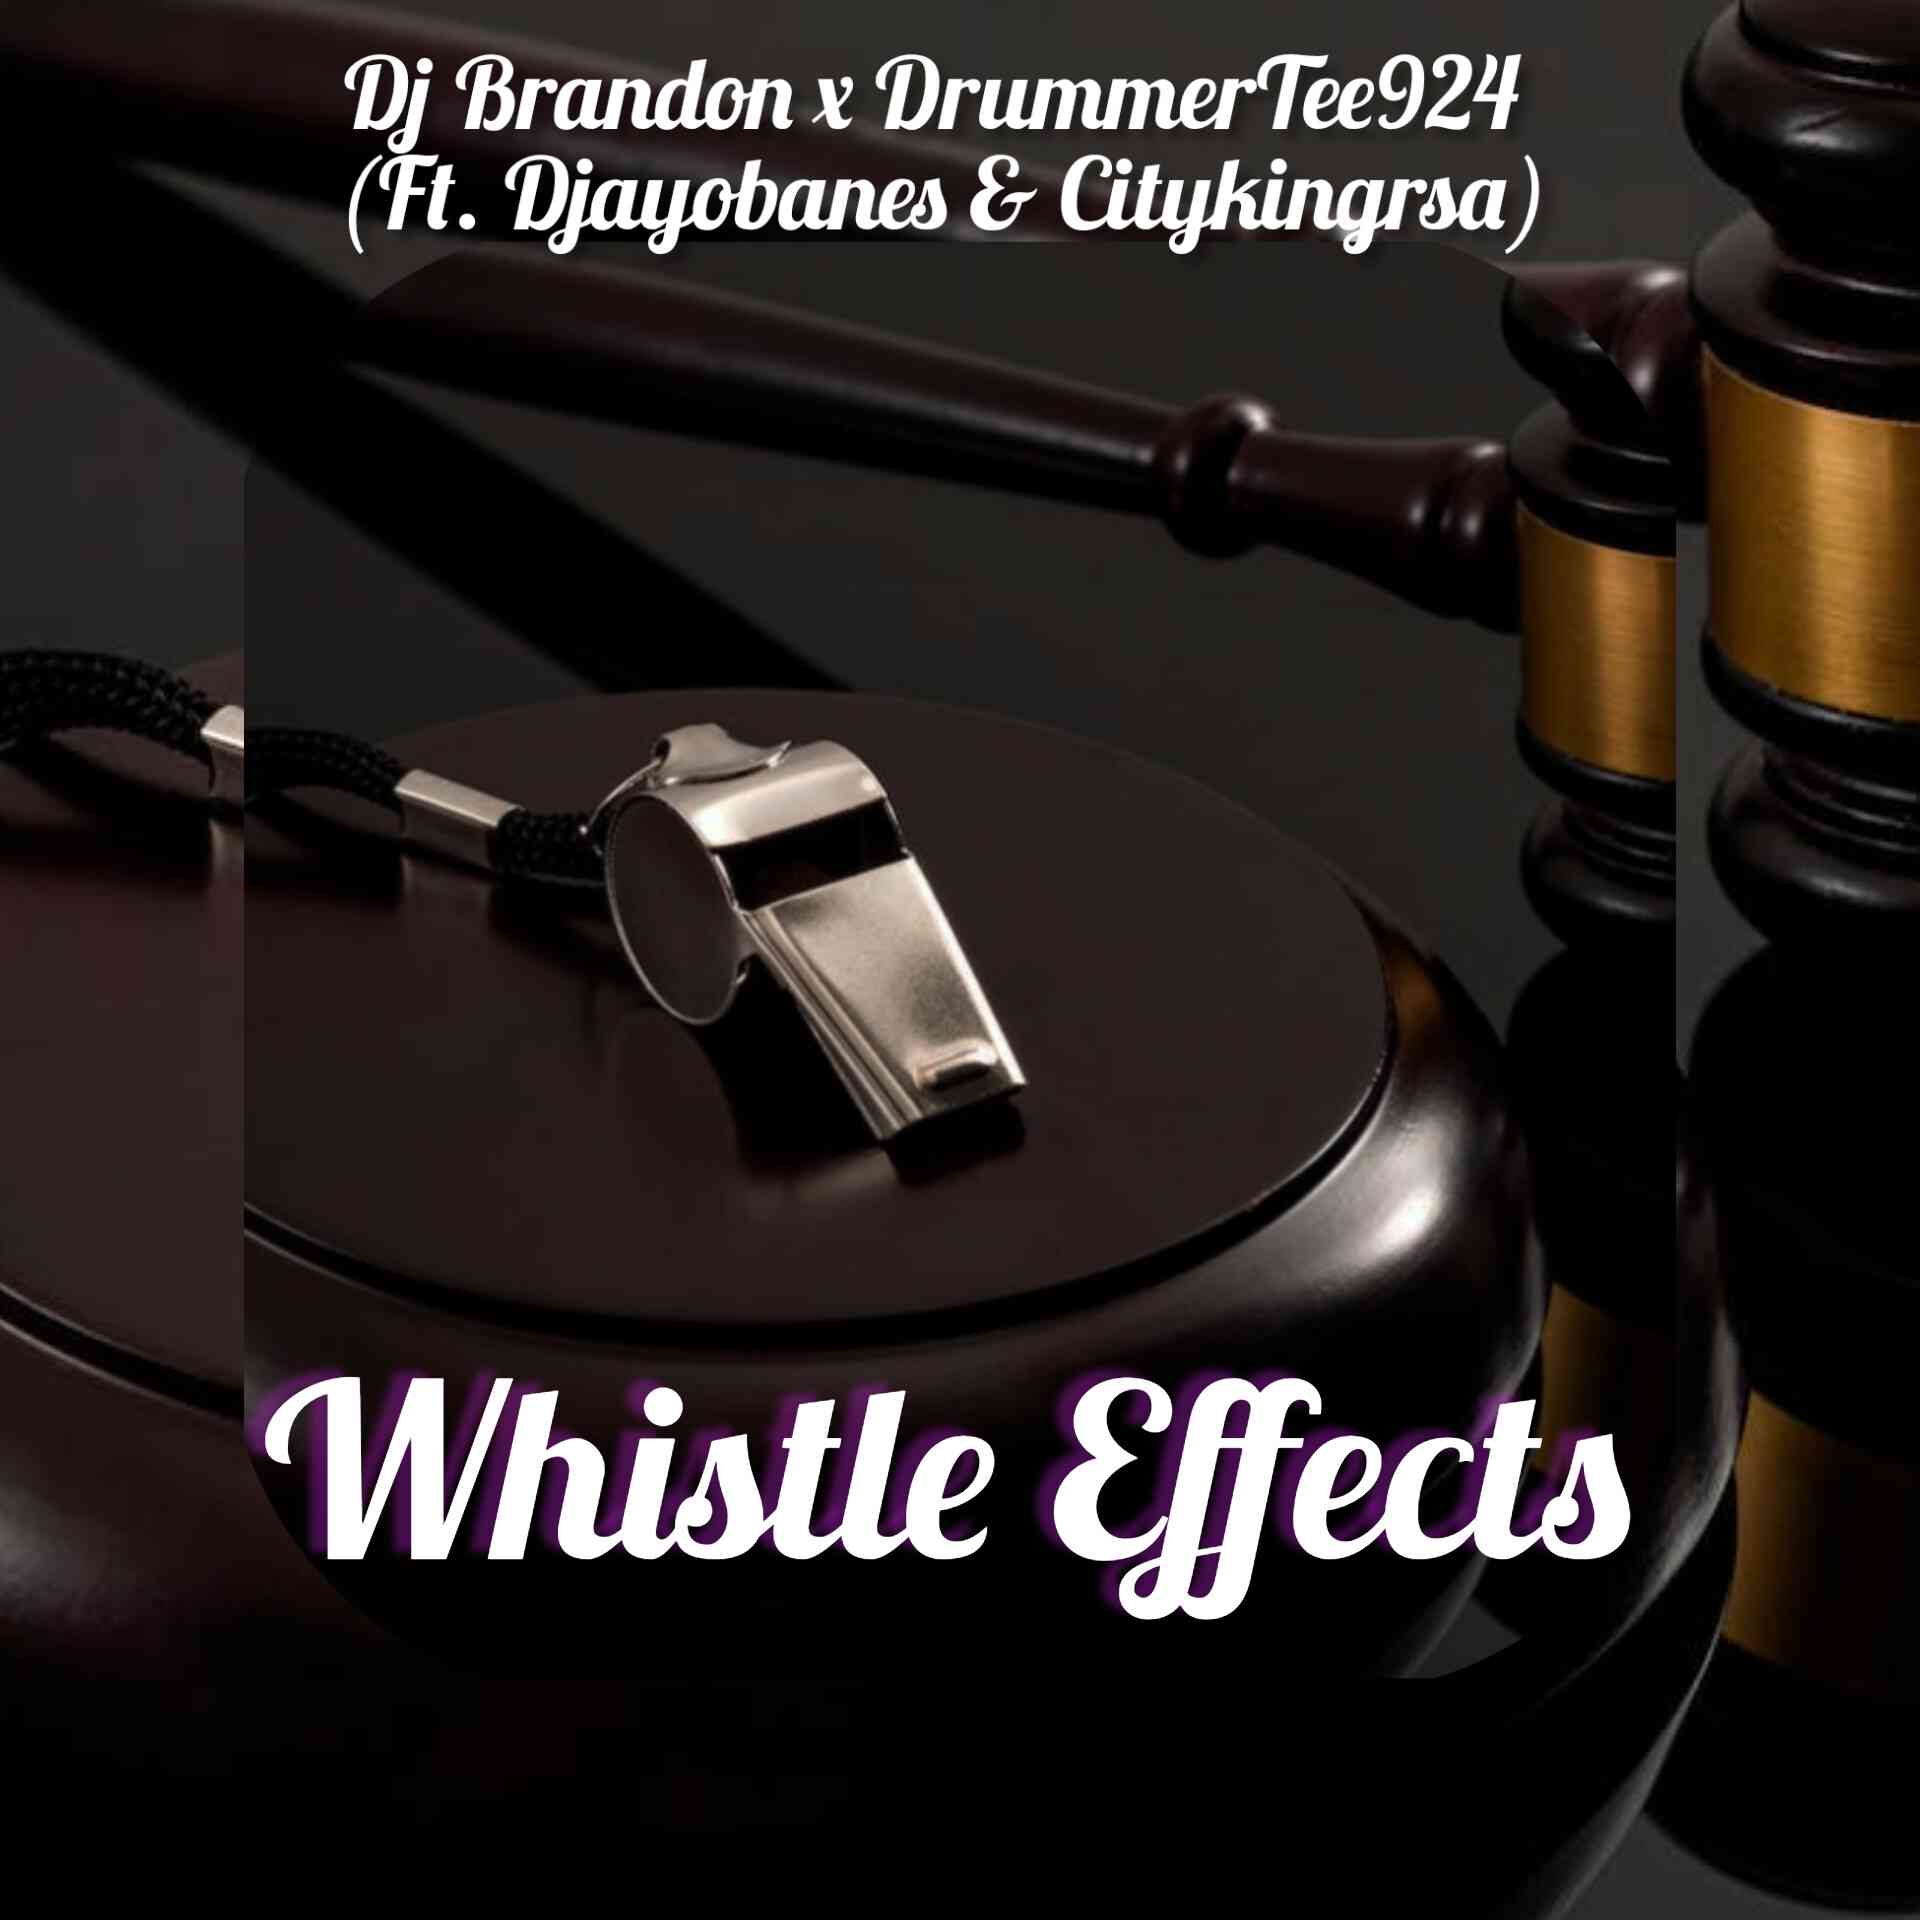 Dj Brandon01 - Whistle Effects 2.0 ft. Dj Ayobanes, DrummeRTee924 & Citykingrsa